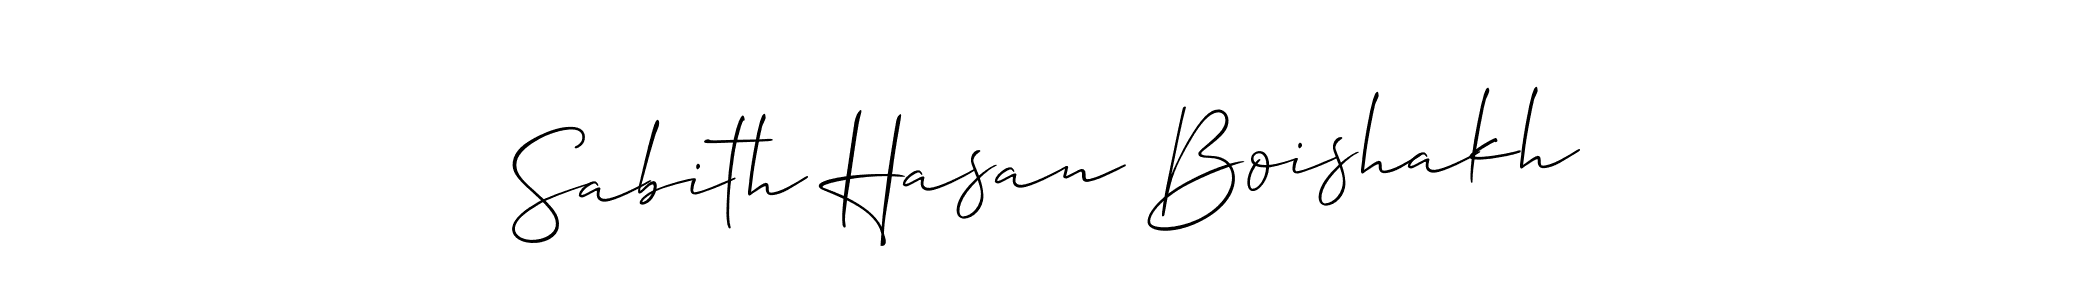 How to Draw Sabith Hasan Boishakh signature style? Allison_Script is a latest design signature styles for name Sabith Hasan Boishakh. Sabith Hasan Boishakh signature style 2 images and pictures png